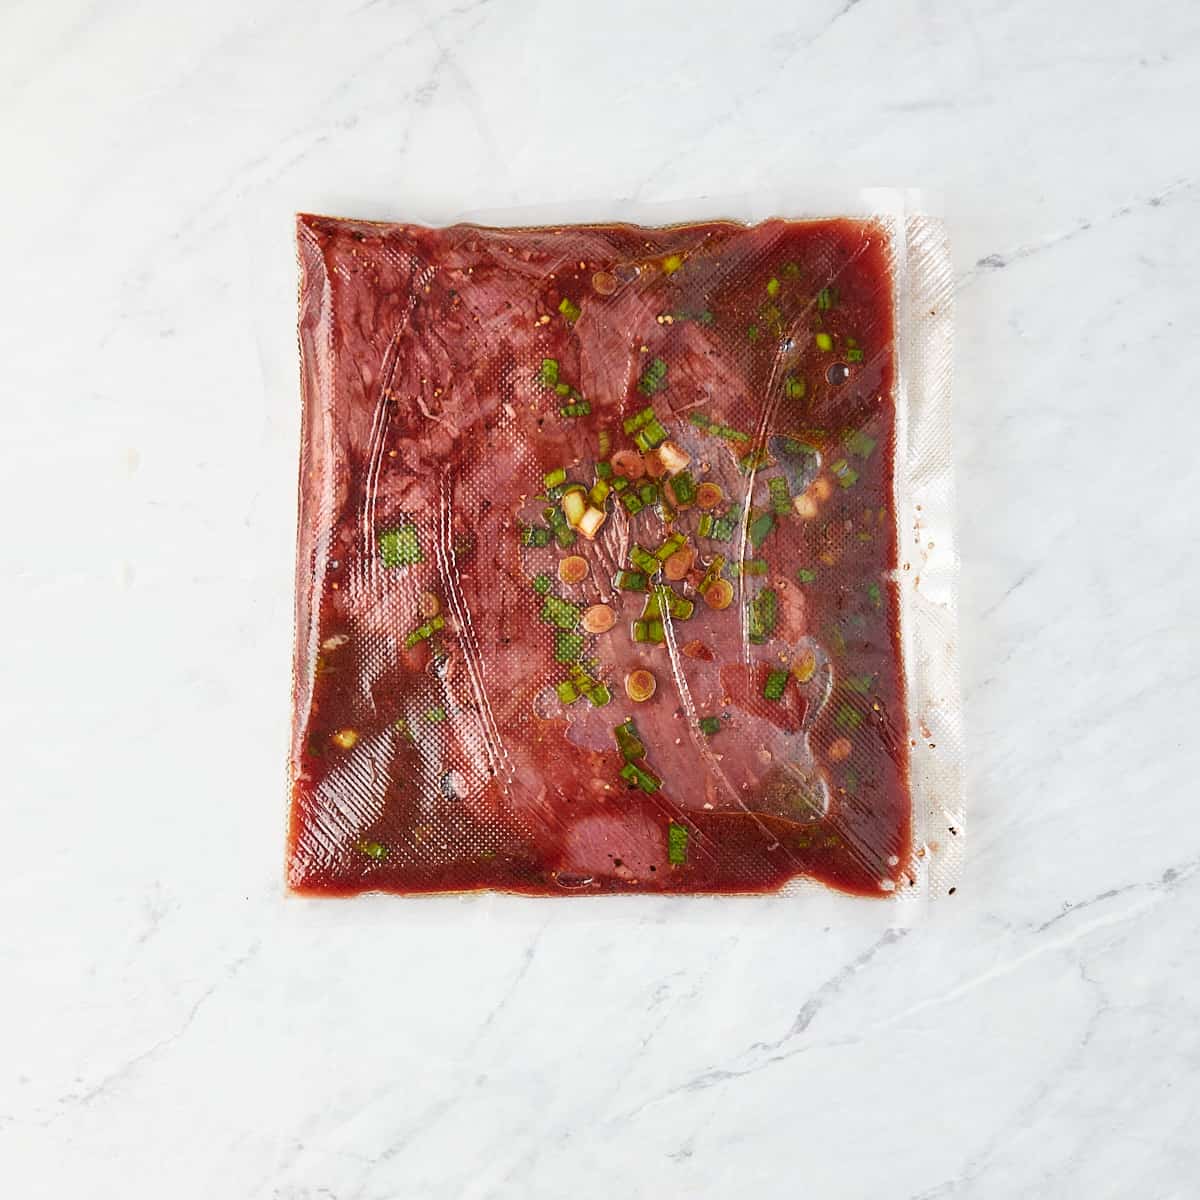 flank steak in ziplock bag with marinade